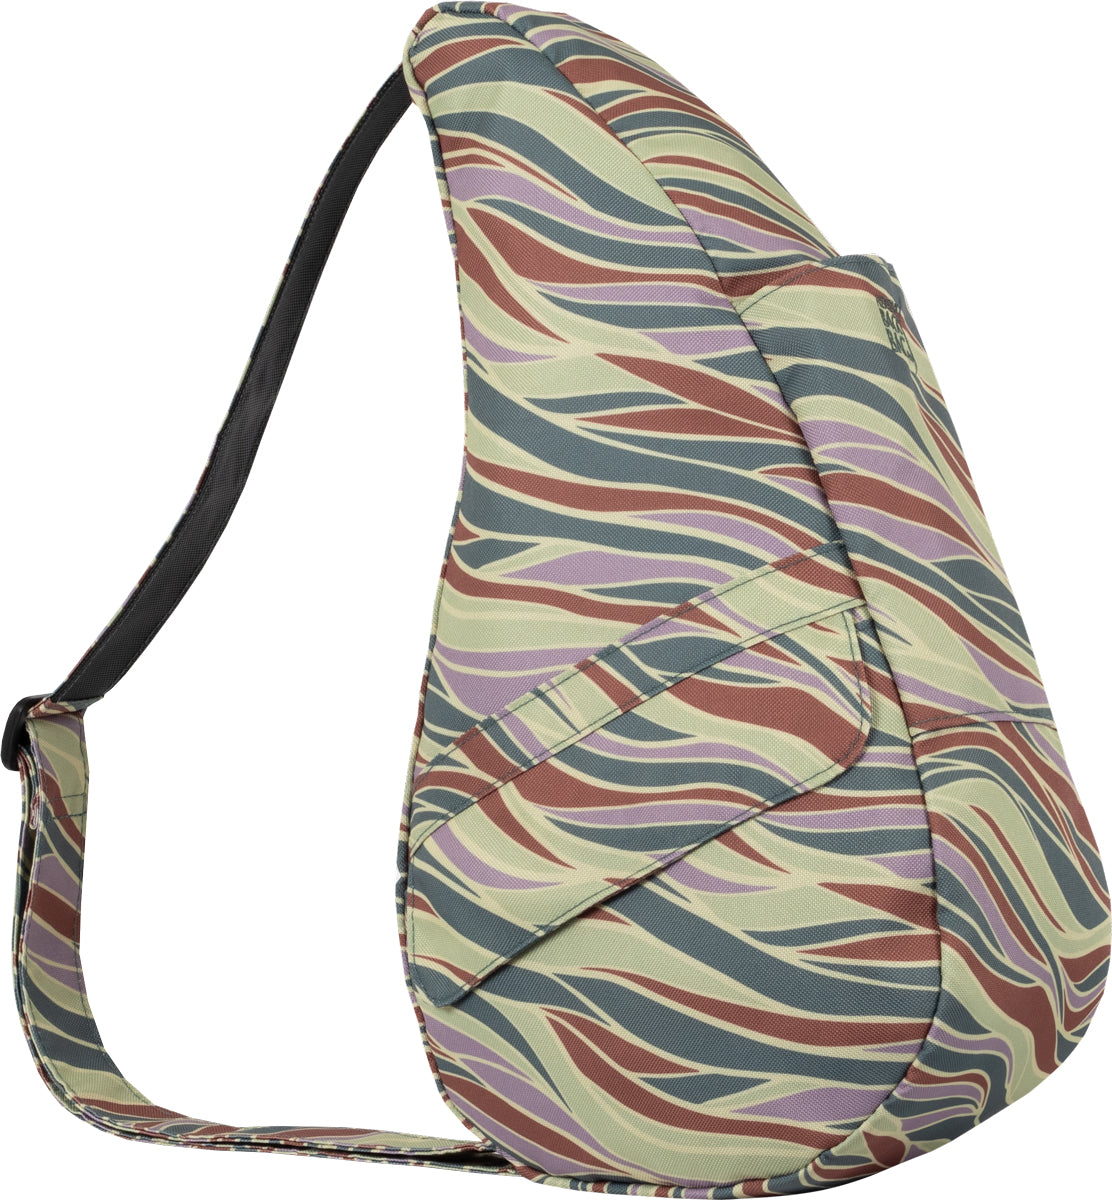 AmeriBag Small Healthy Back Bag Tote Prints and Patterns (Freeflow 2)